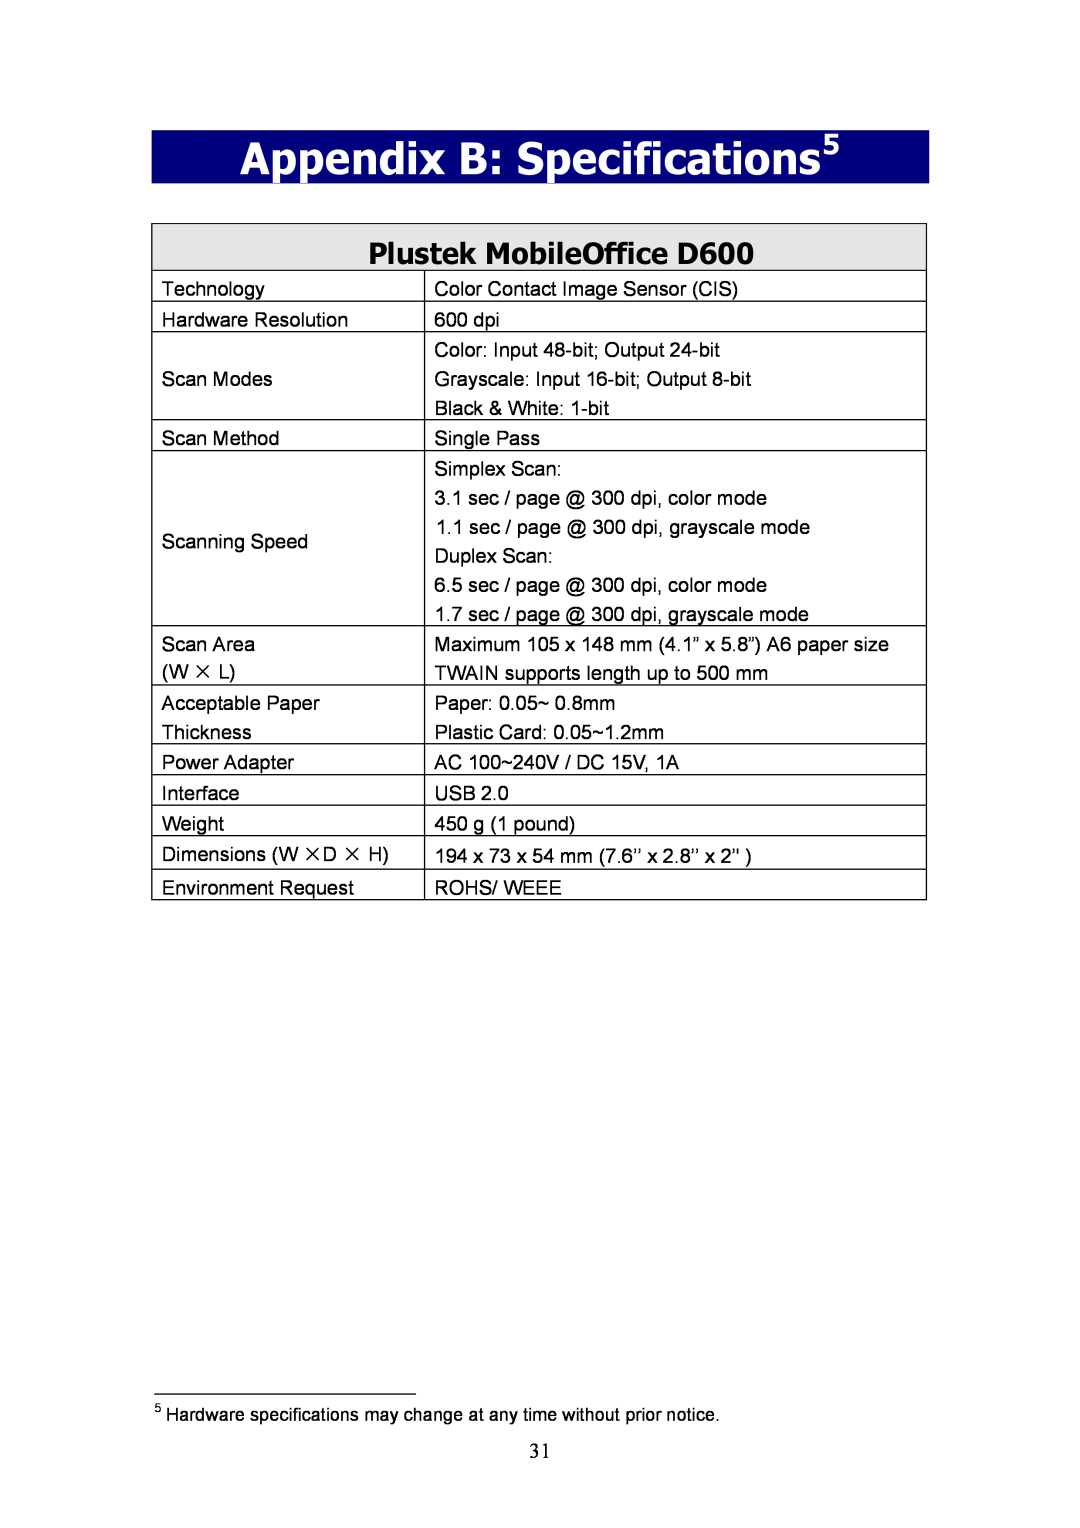 Plustek MobileOffice Scanner manual Appendix B Specifications5, Plustek MobileOffice D600 